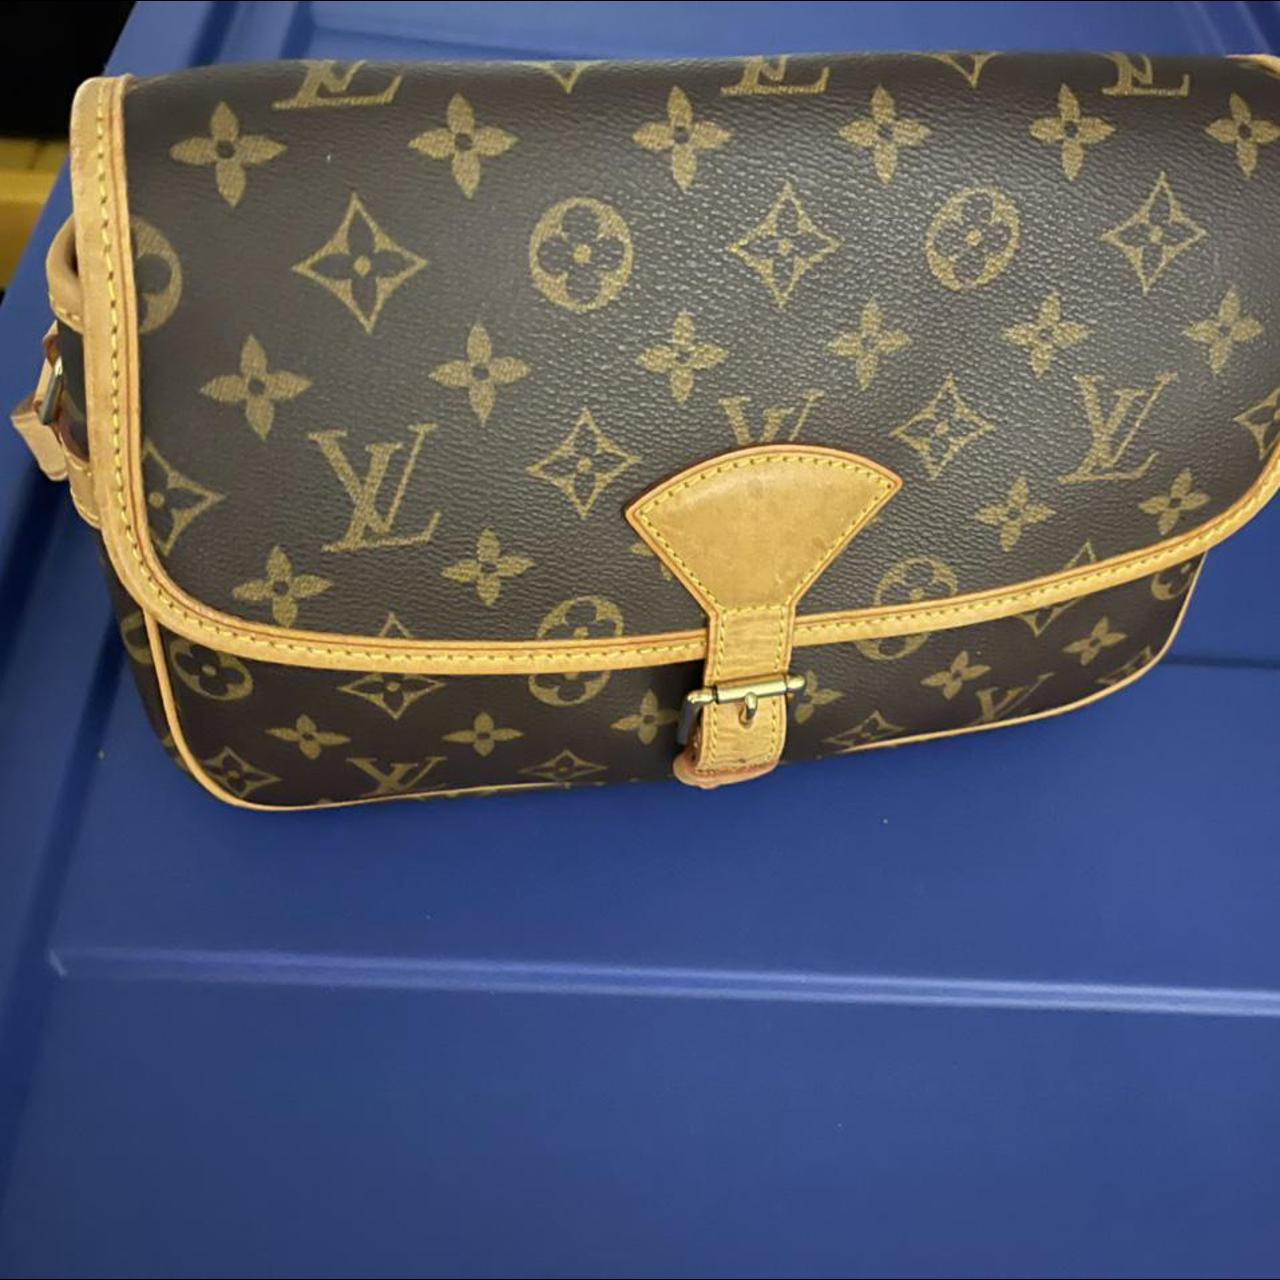 Authentic Louis Vuitton bag with authenticity card